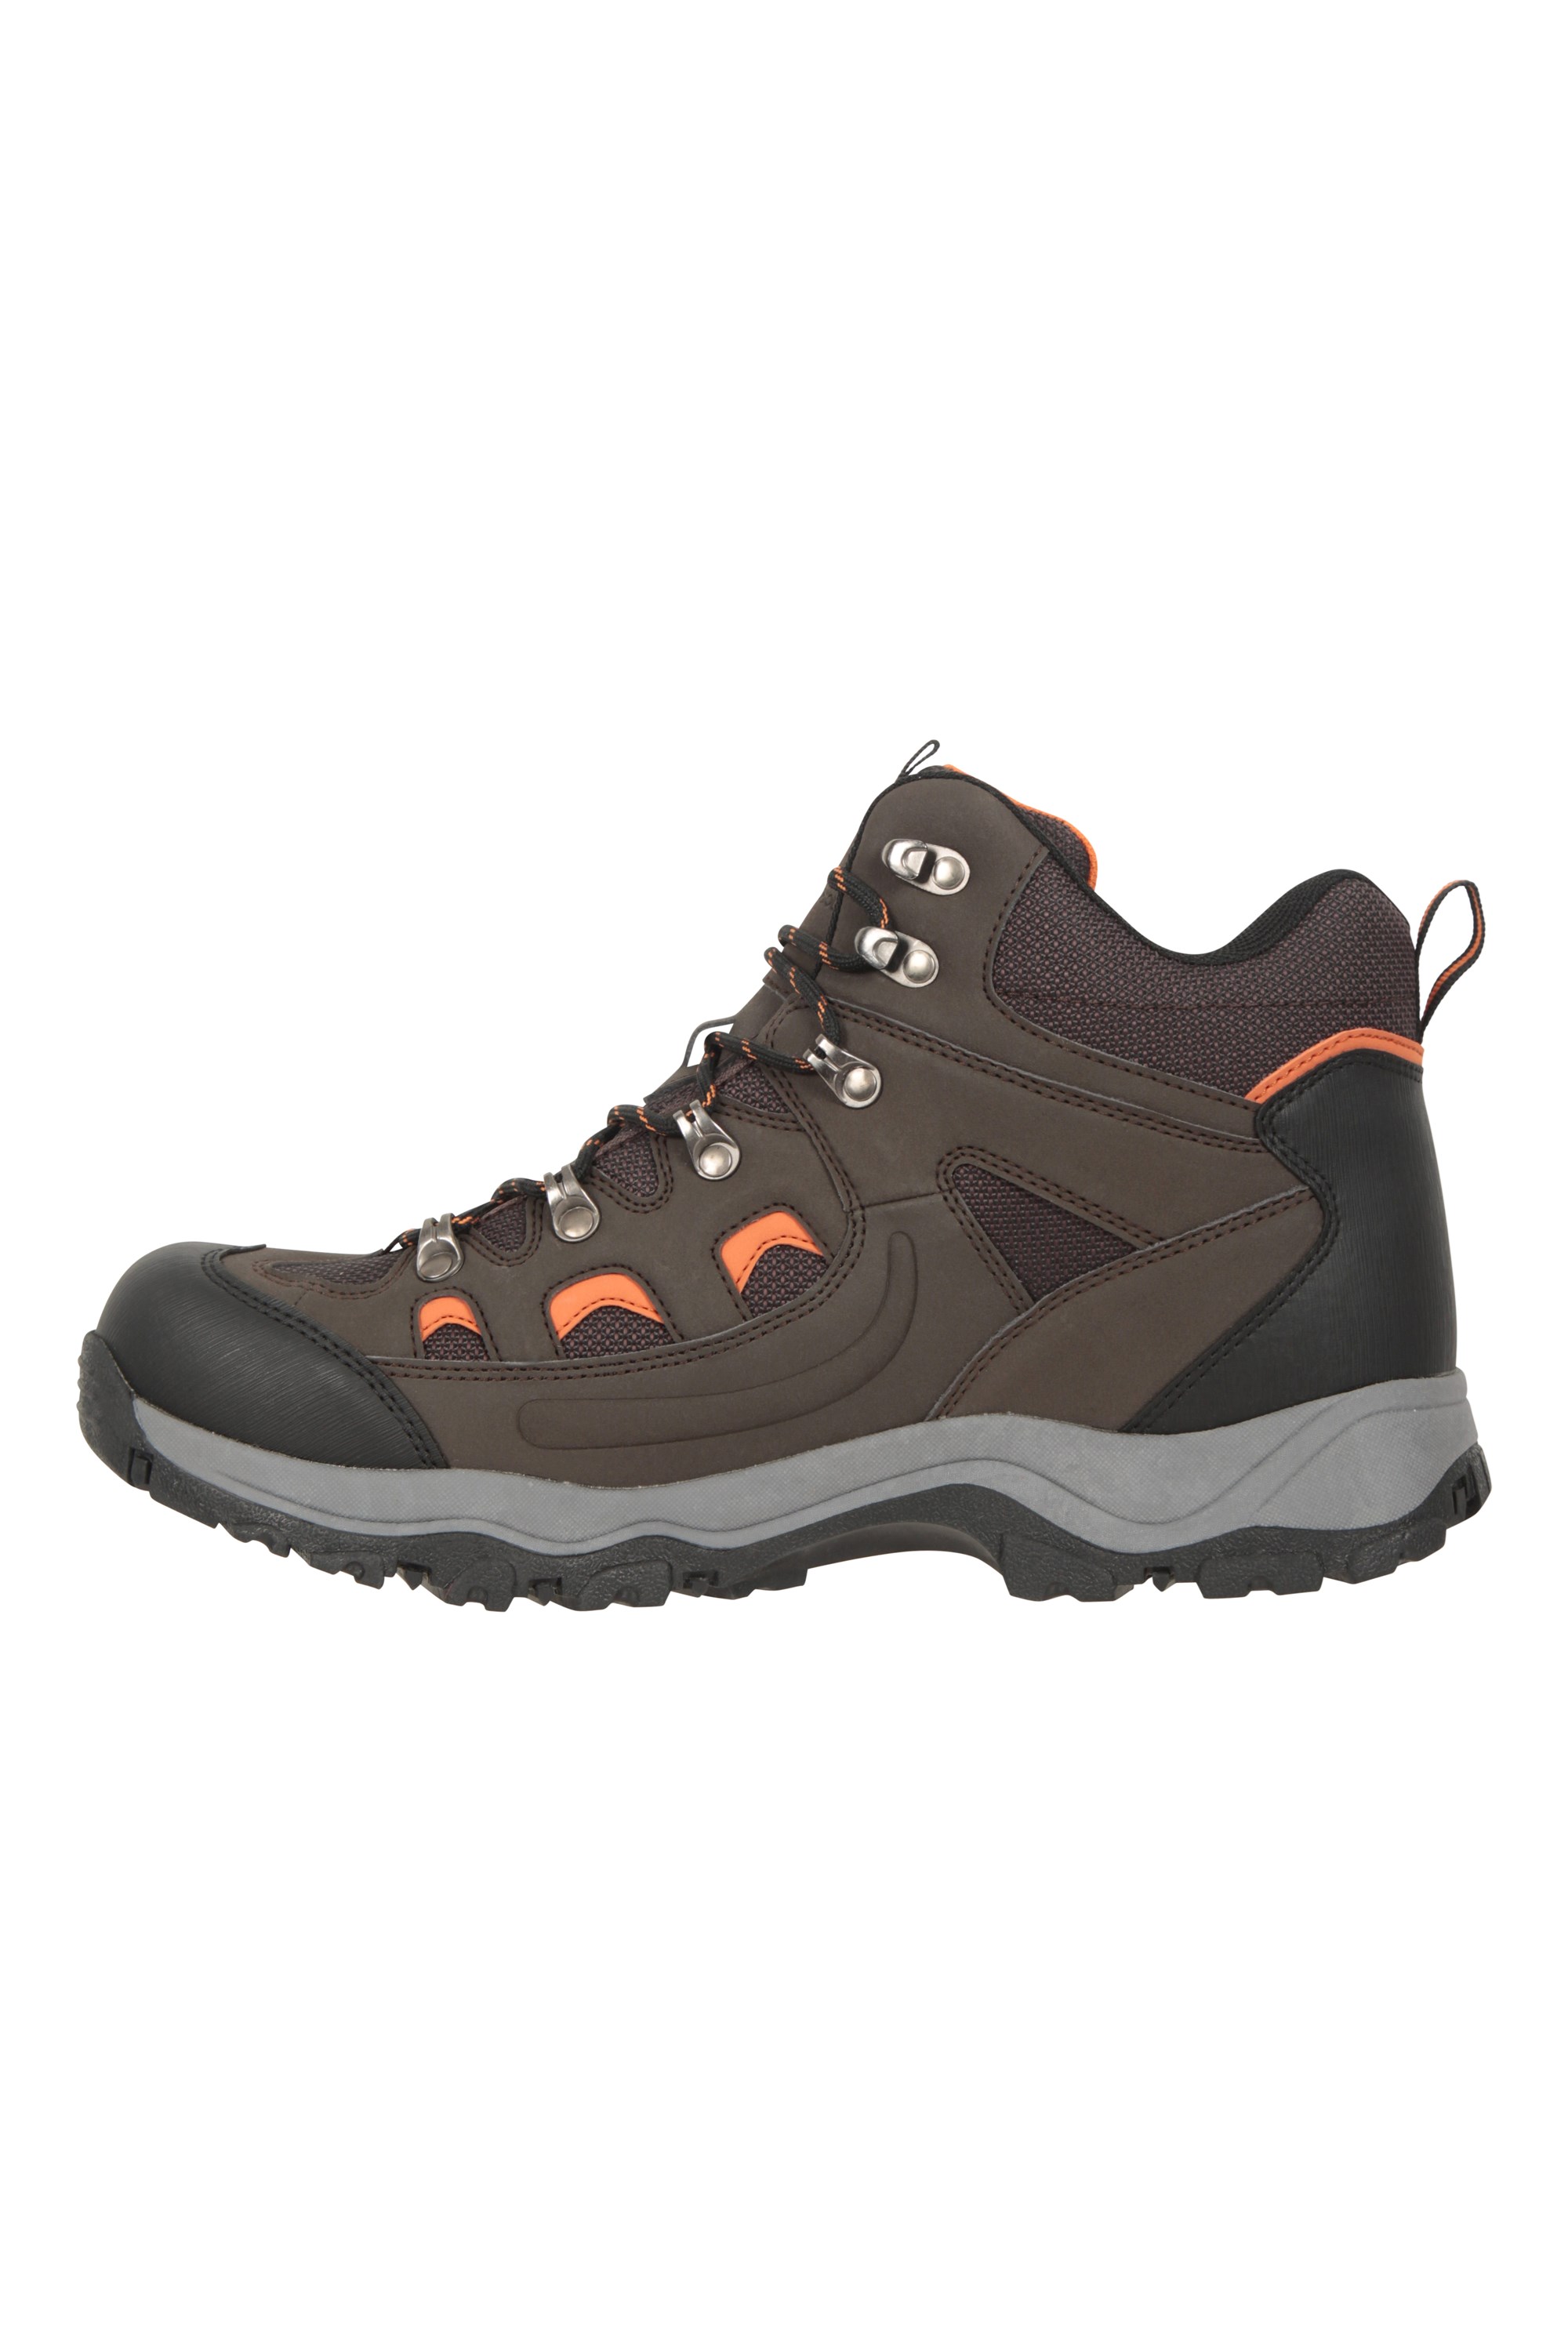 Adventurer Mens Waterproof Hiking Boots